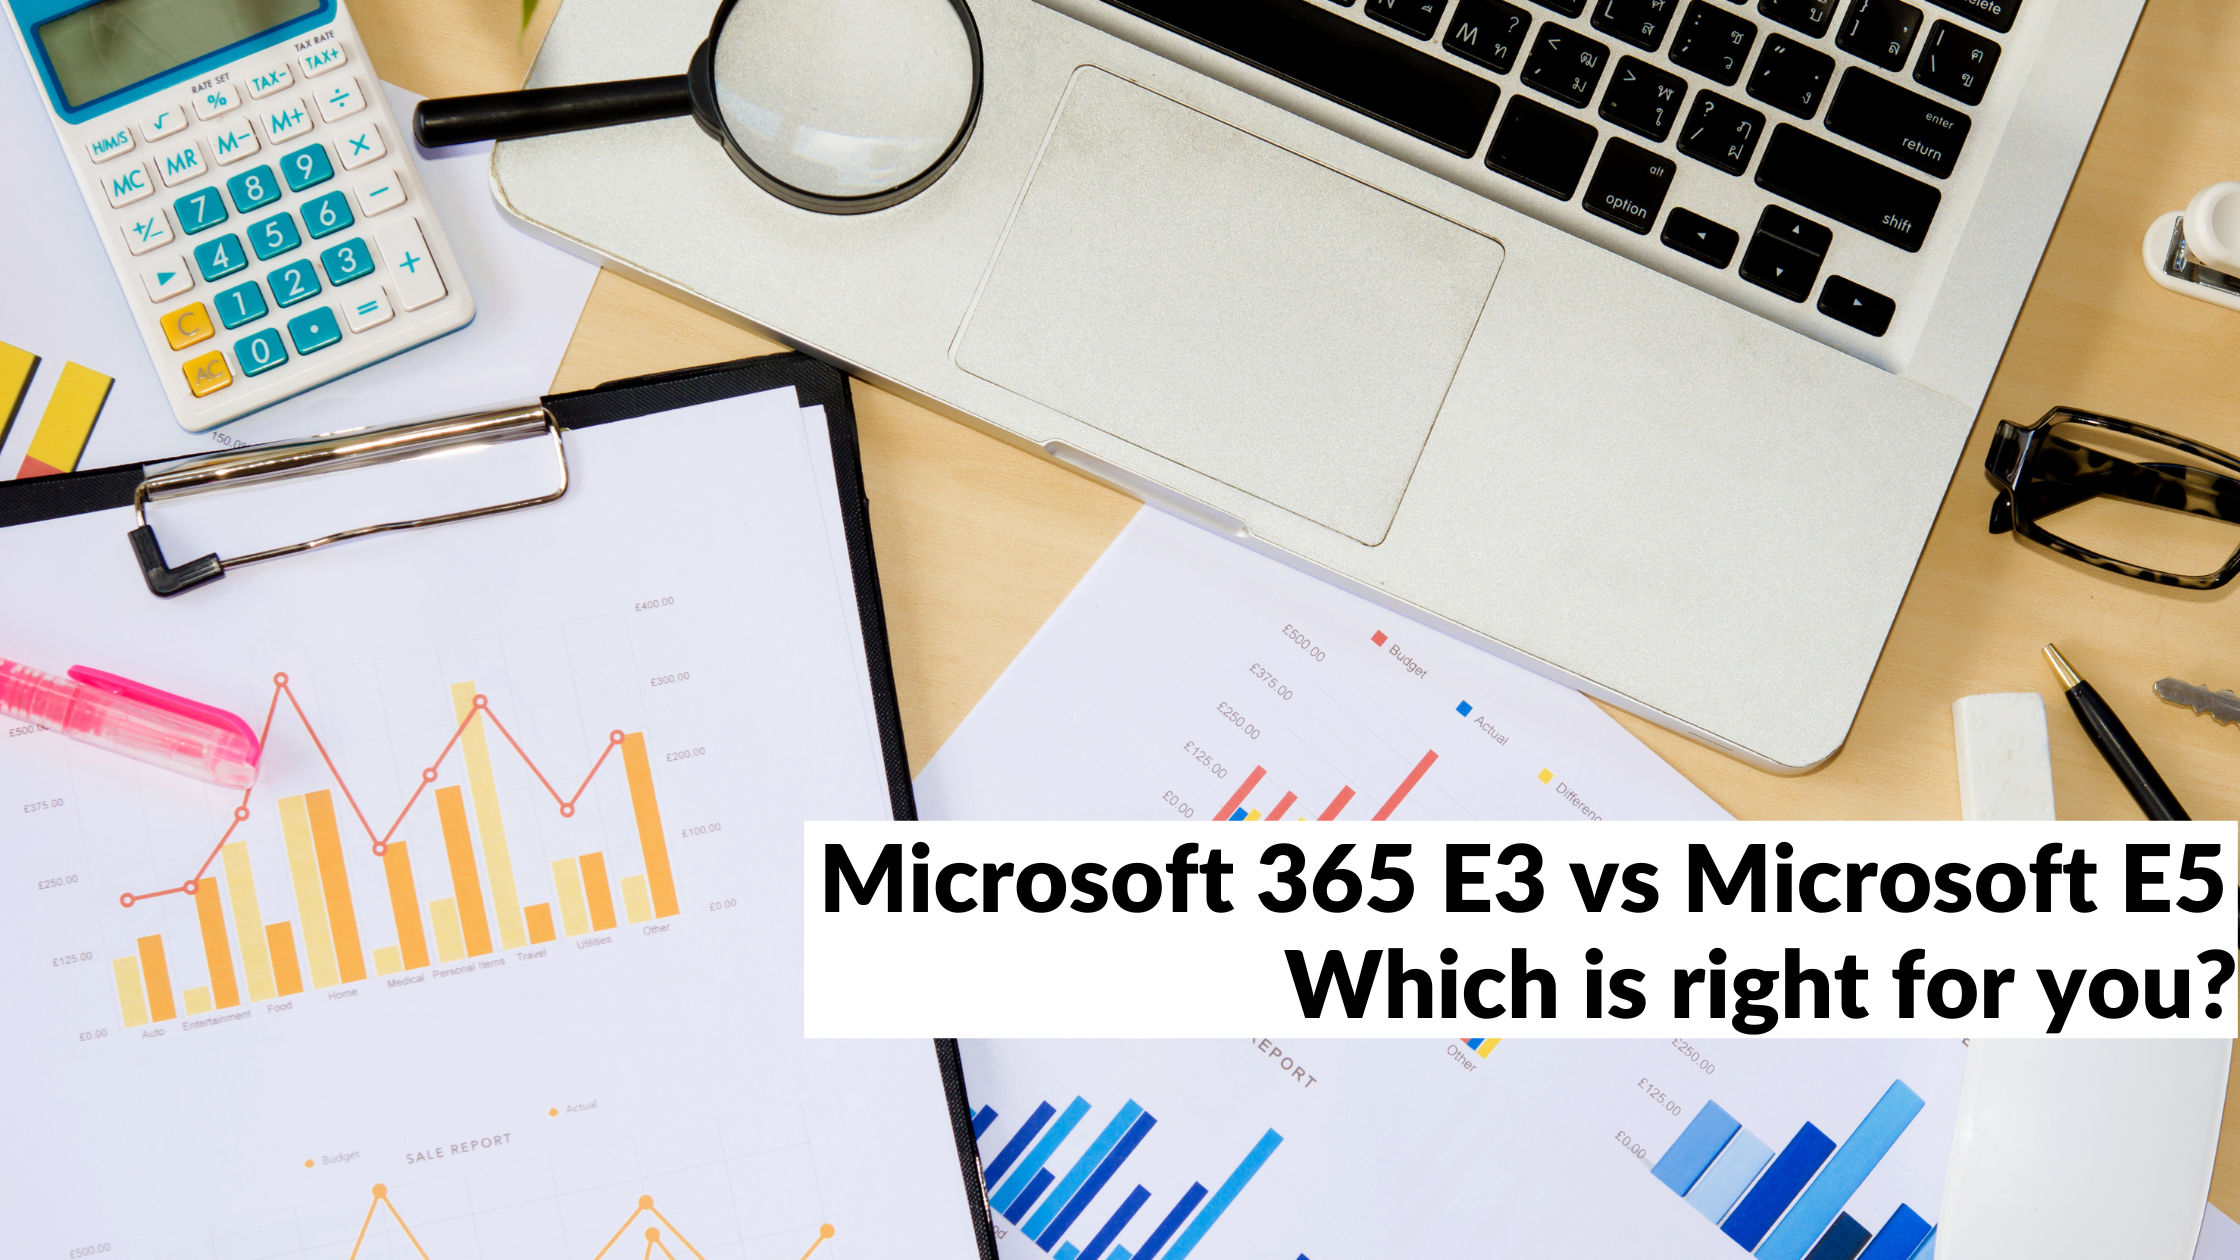 Microsoft 365 E3 versus E5. Which is right for you?